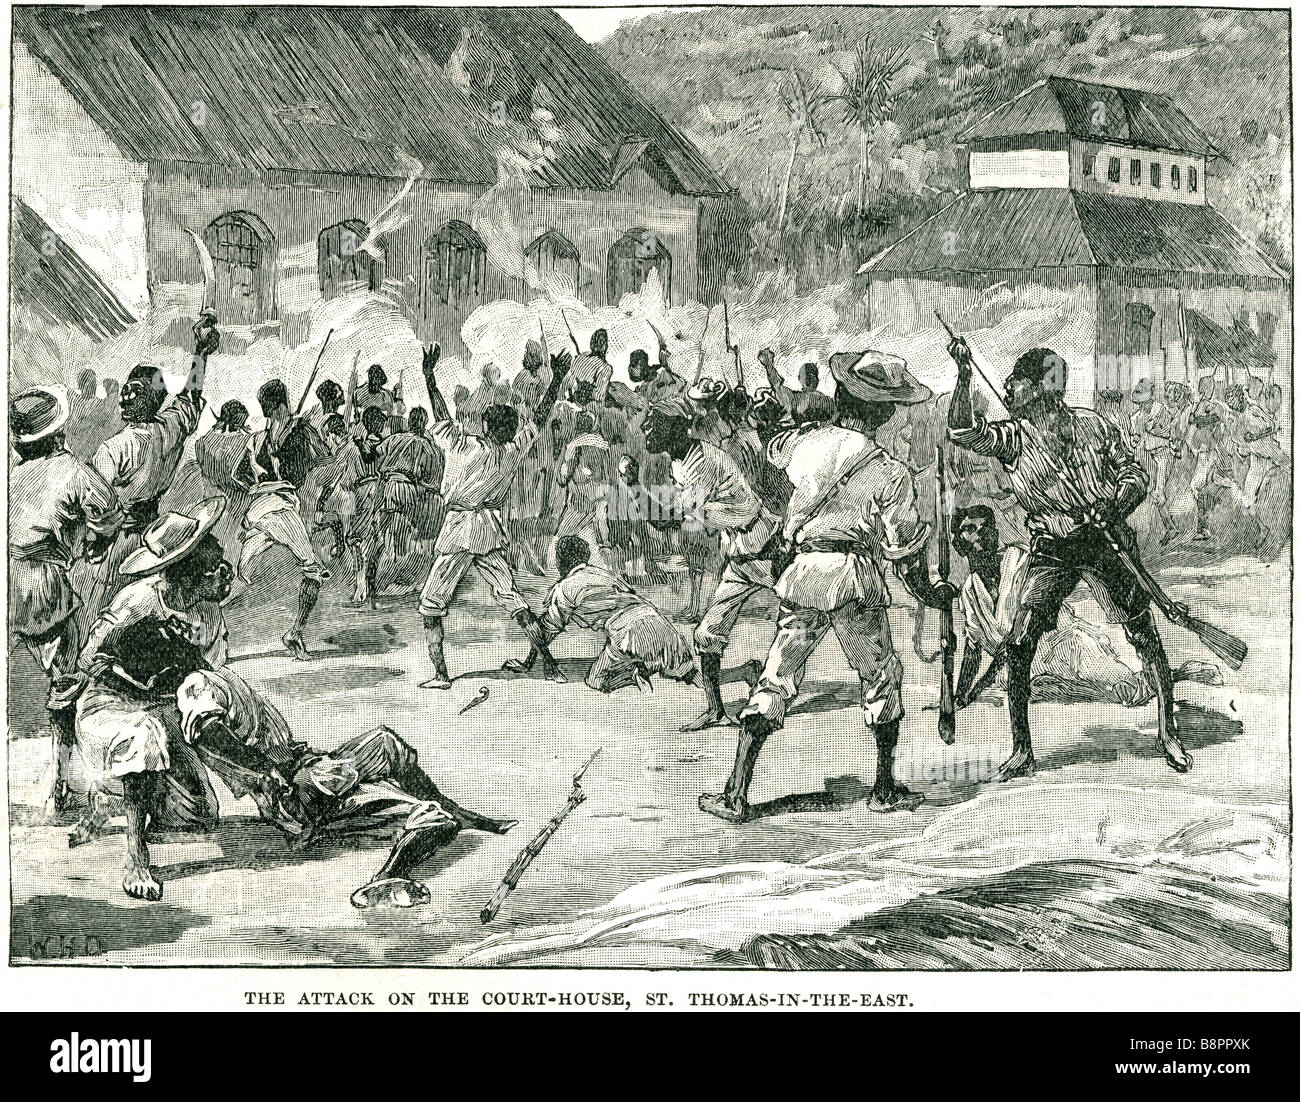 angreifen, Gericht Haus St. Thomas im Osten 1865 Morant Bay Jamaika Stockfoto